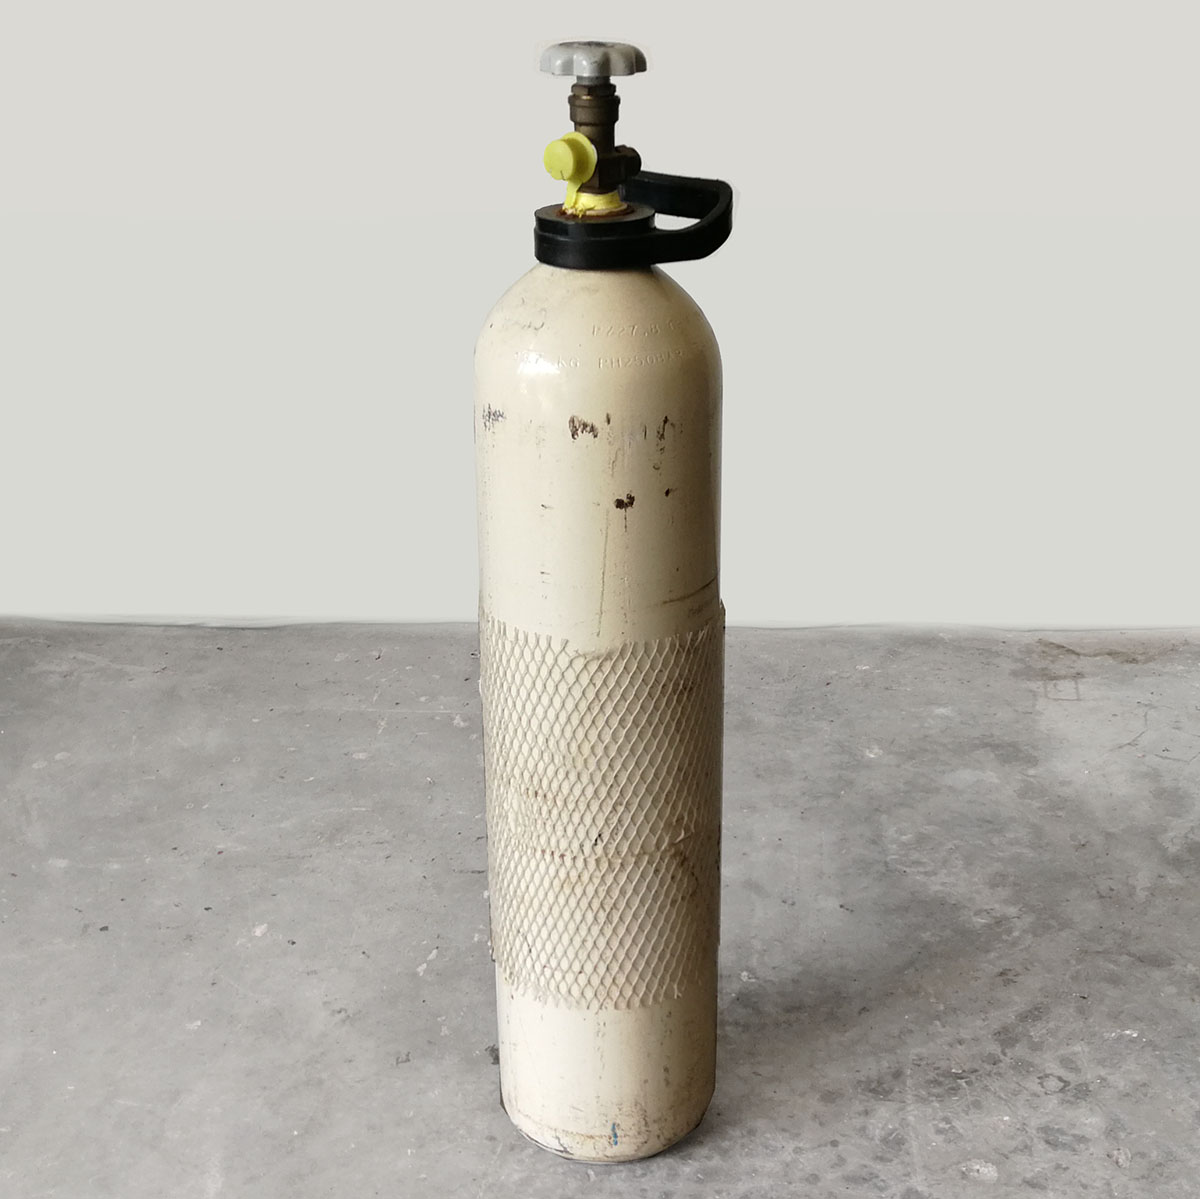 CO₂ Gas Cylinder for Viscount-image